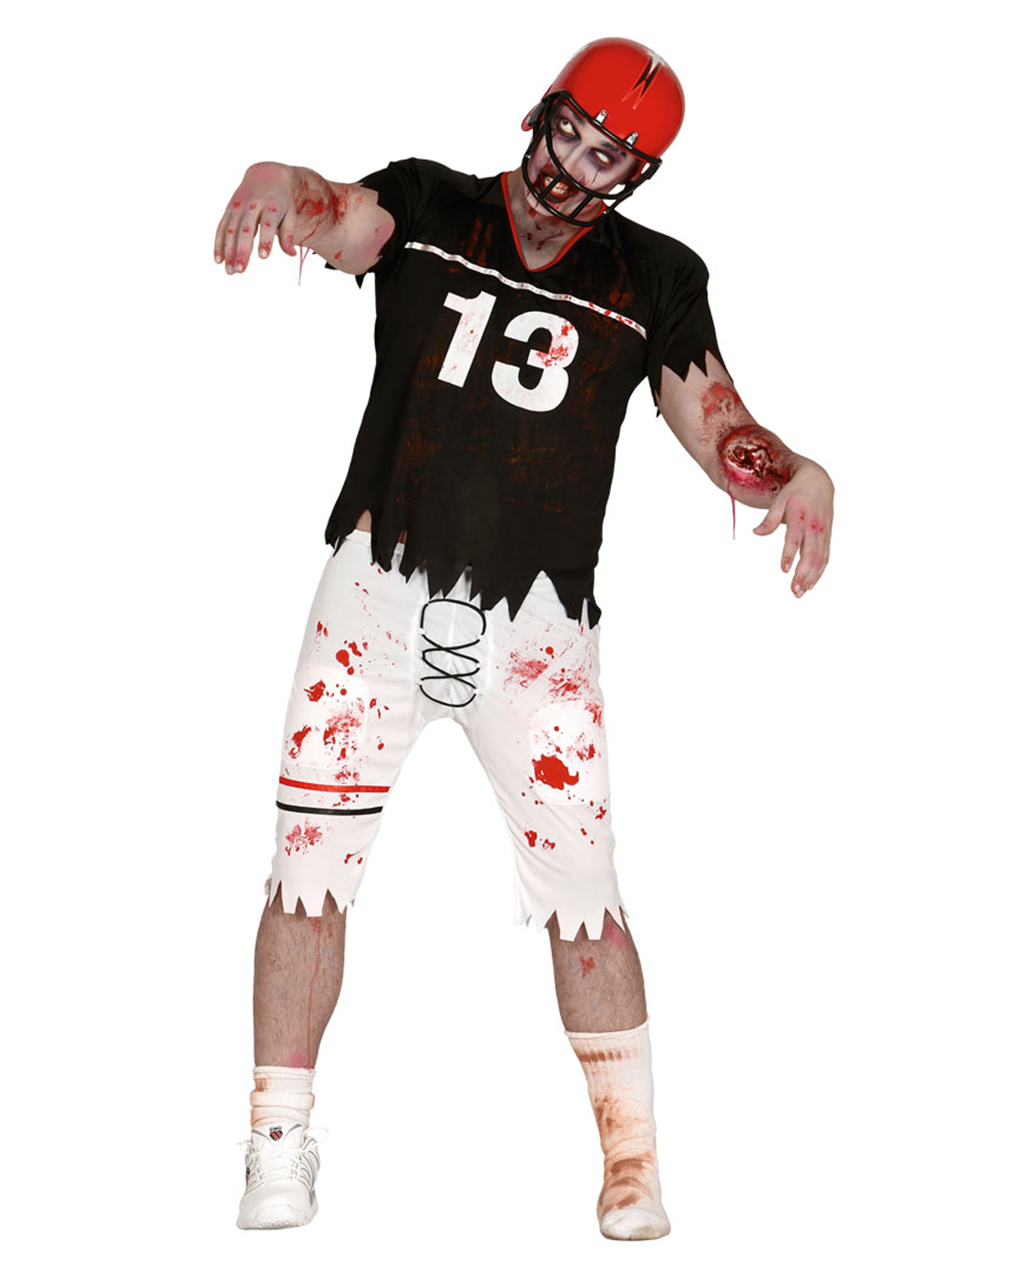 zombie football spieler kostuem toter rugby spieler verkleidung rugby player costume 26487